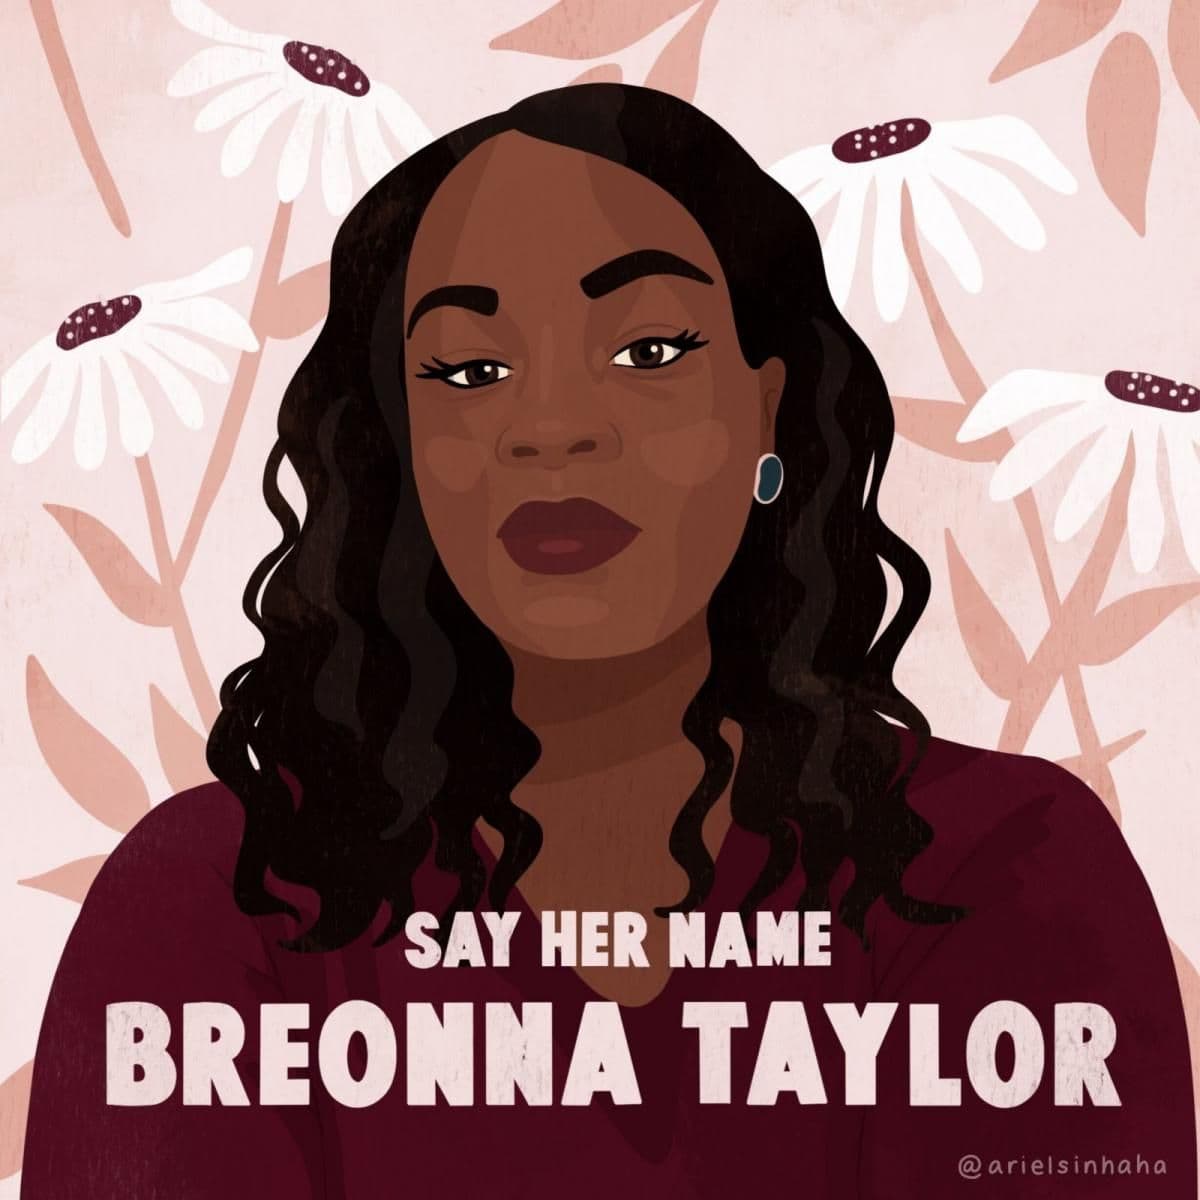 Illustration of Breonna Taylor by Ariel Sinha